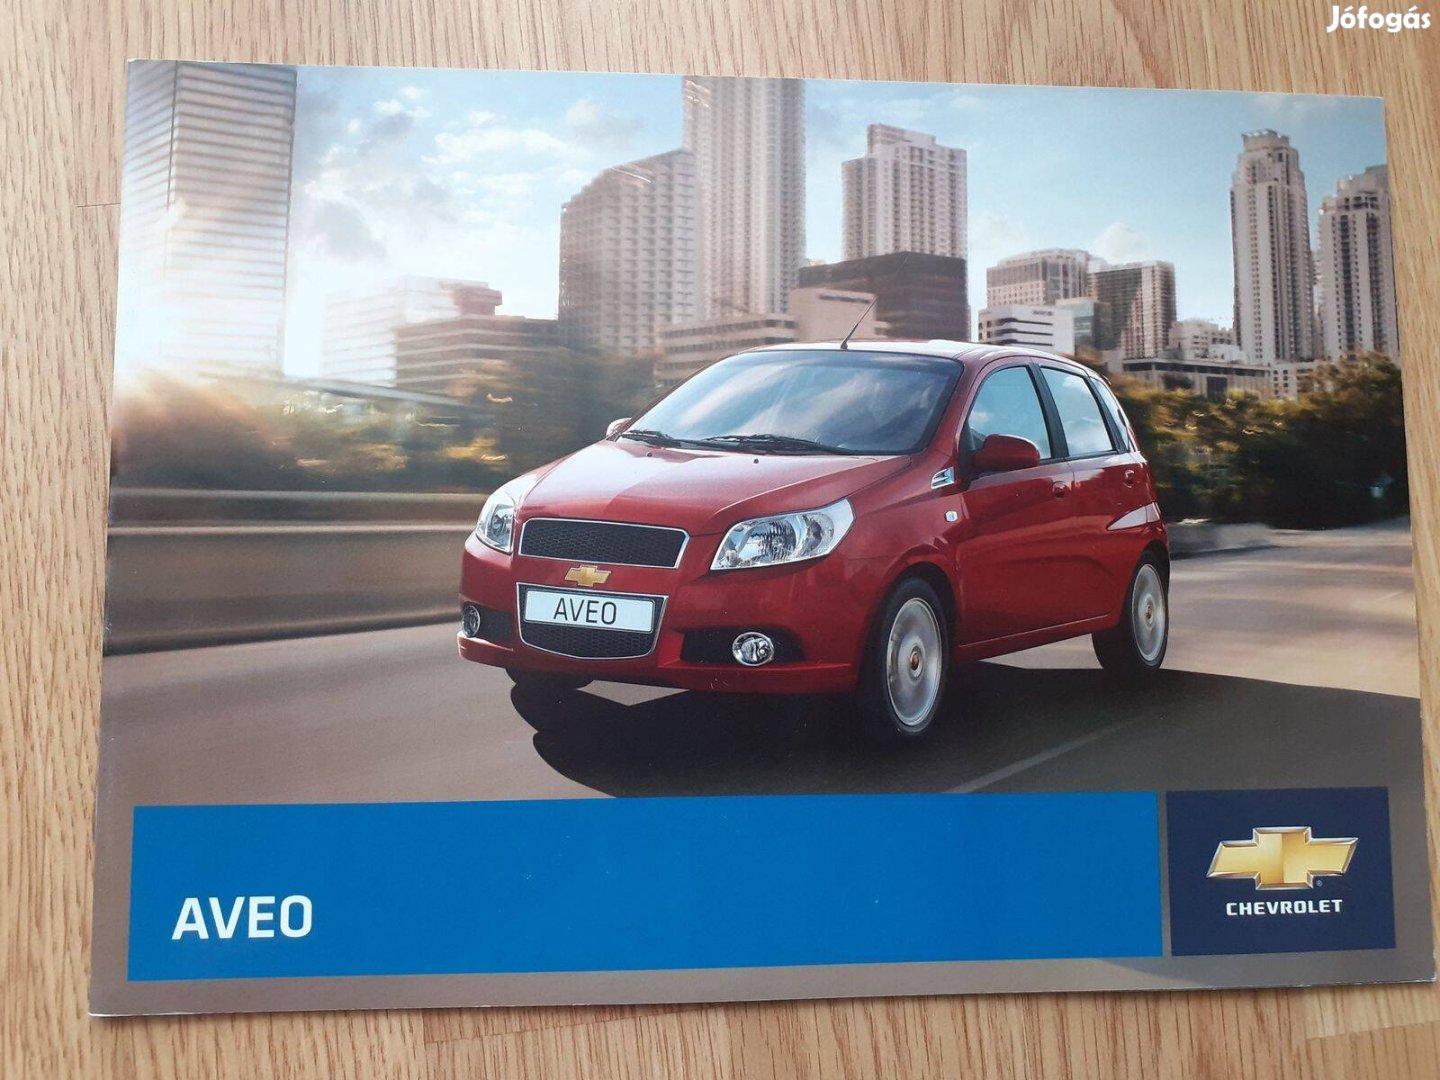 Chevrolet Aveo prospektus - 2008, magyar nyelvű